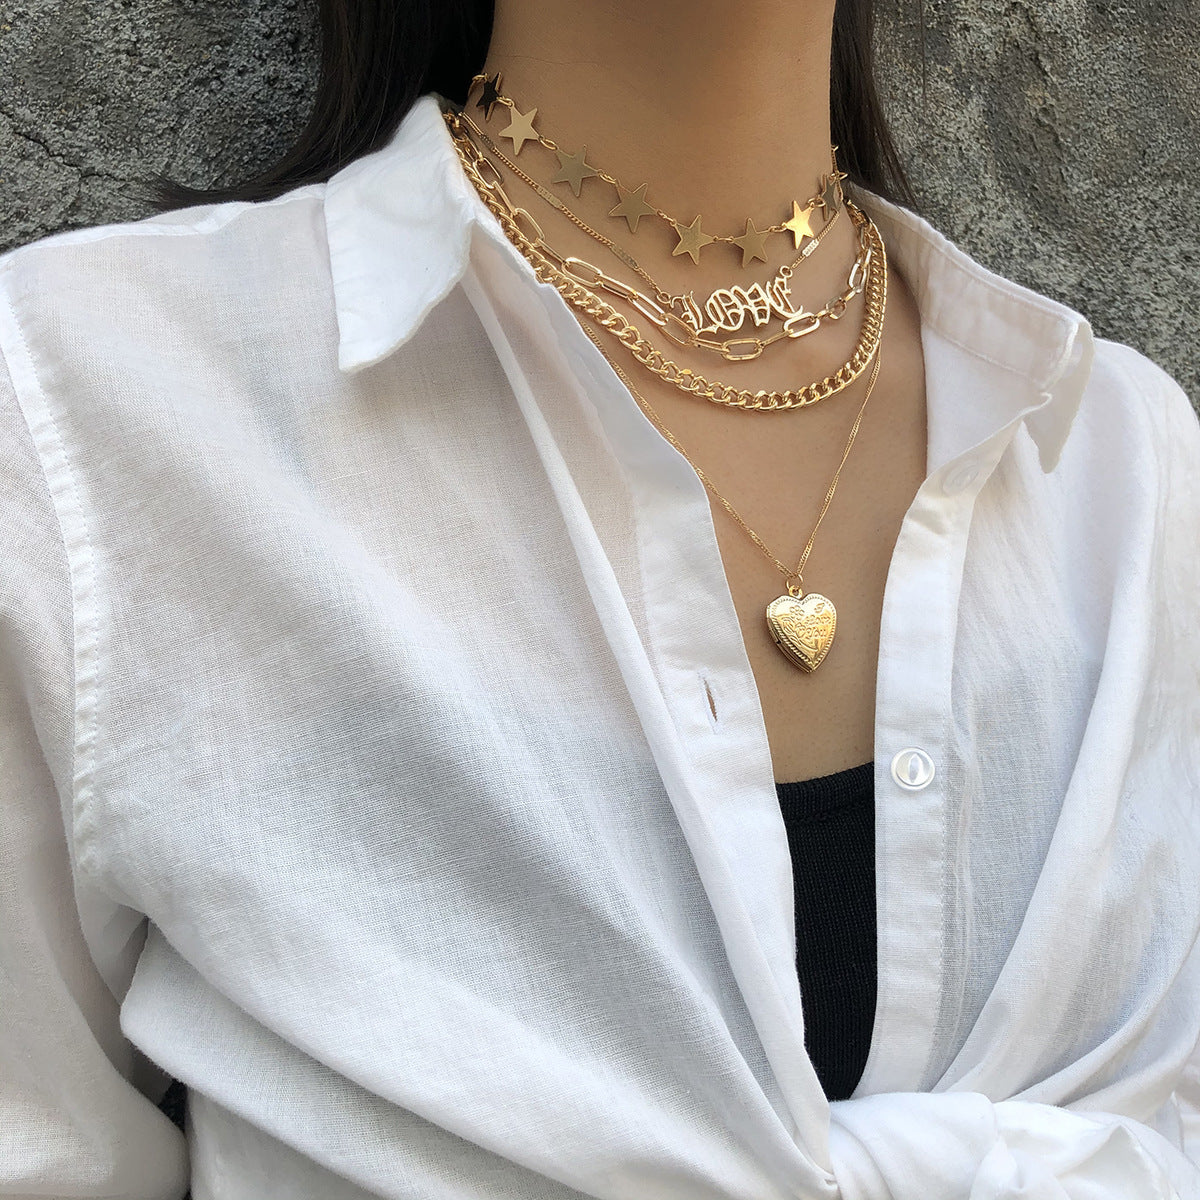 Arzonai jewelry retro chain open peach heart necklace female personality multi-layer star-shaped LOVE geometric necklace